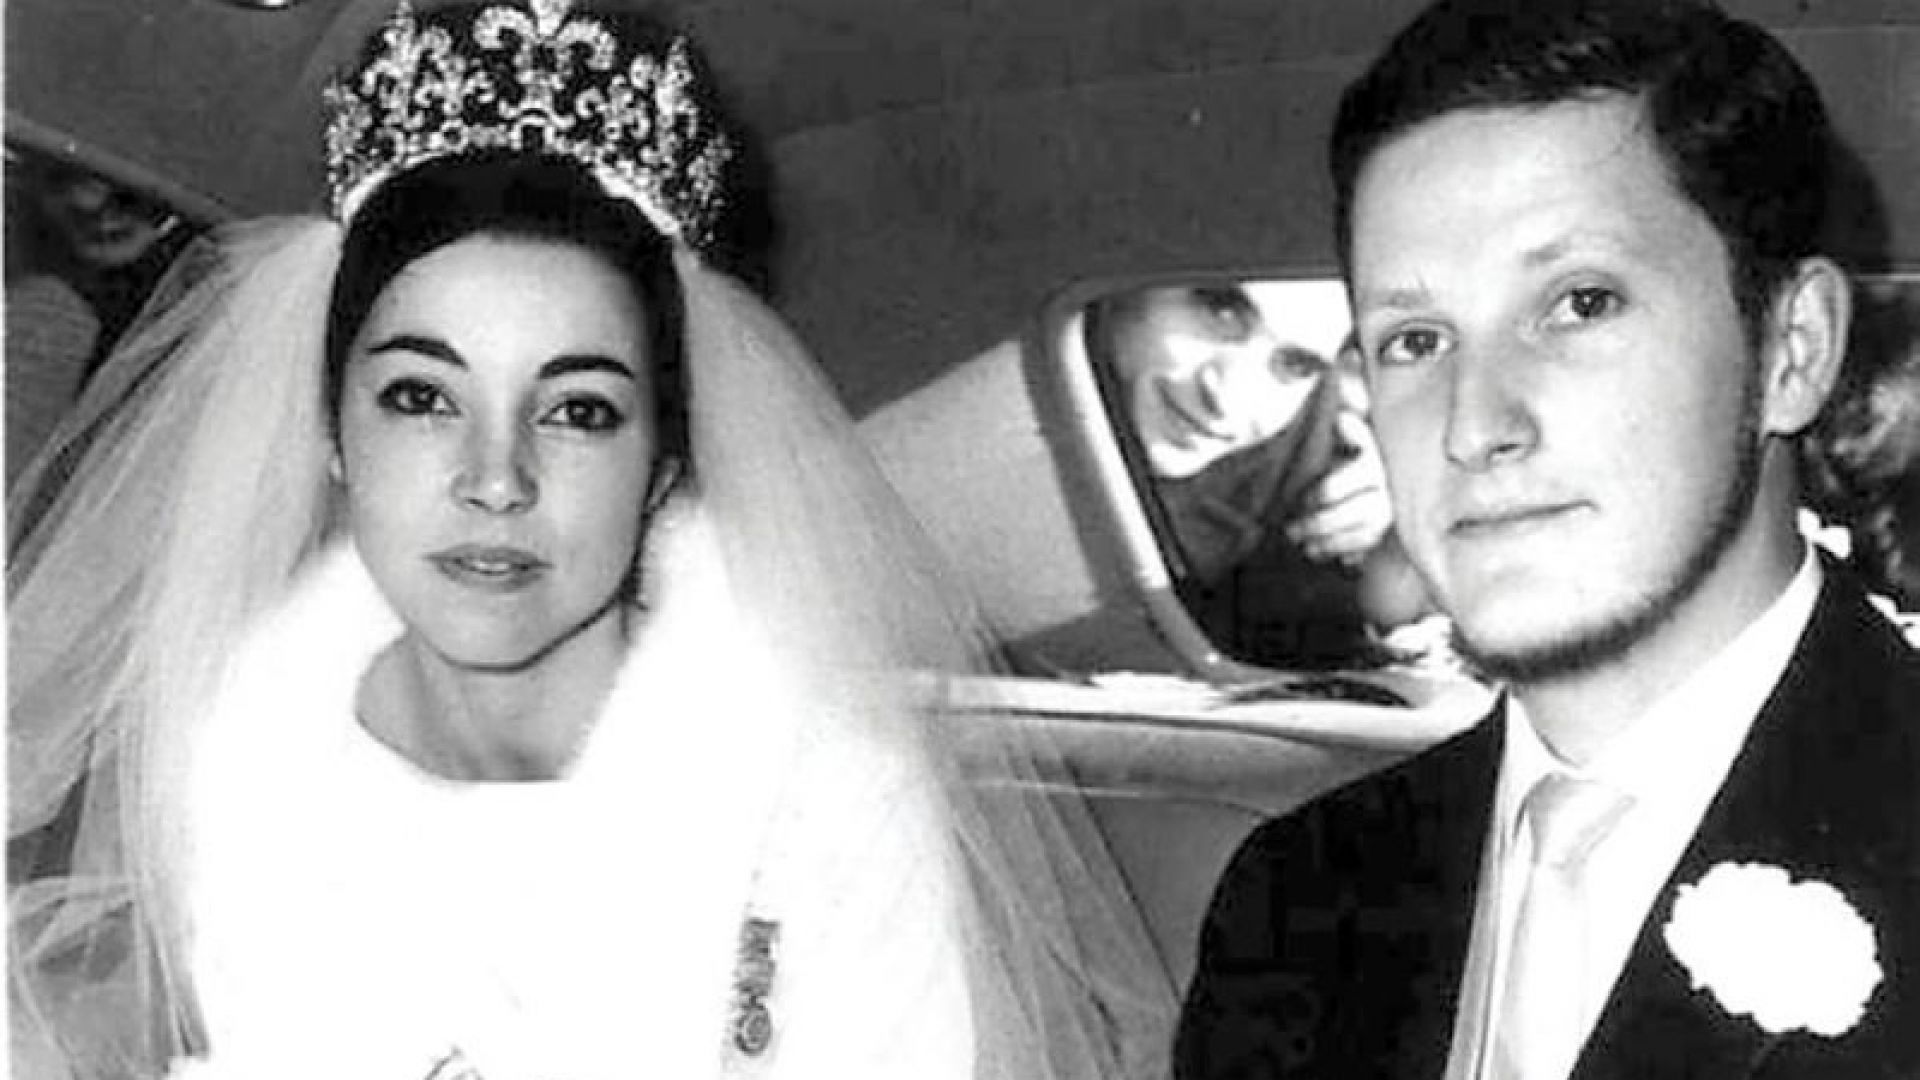 Симеон Сакскобургготски и доня Маргарита честват диамантена сватба 